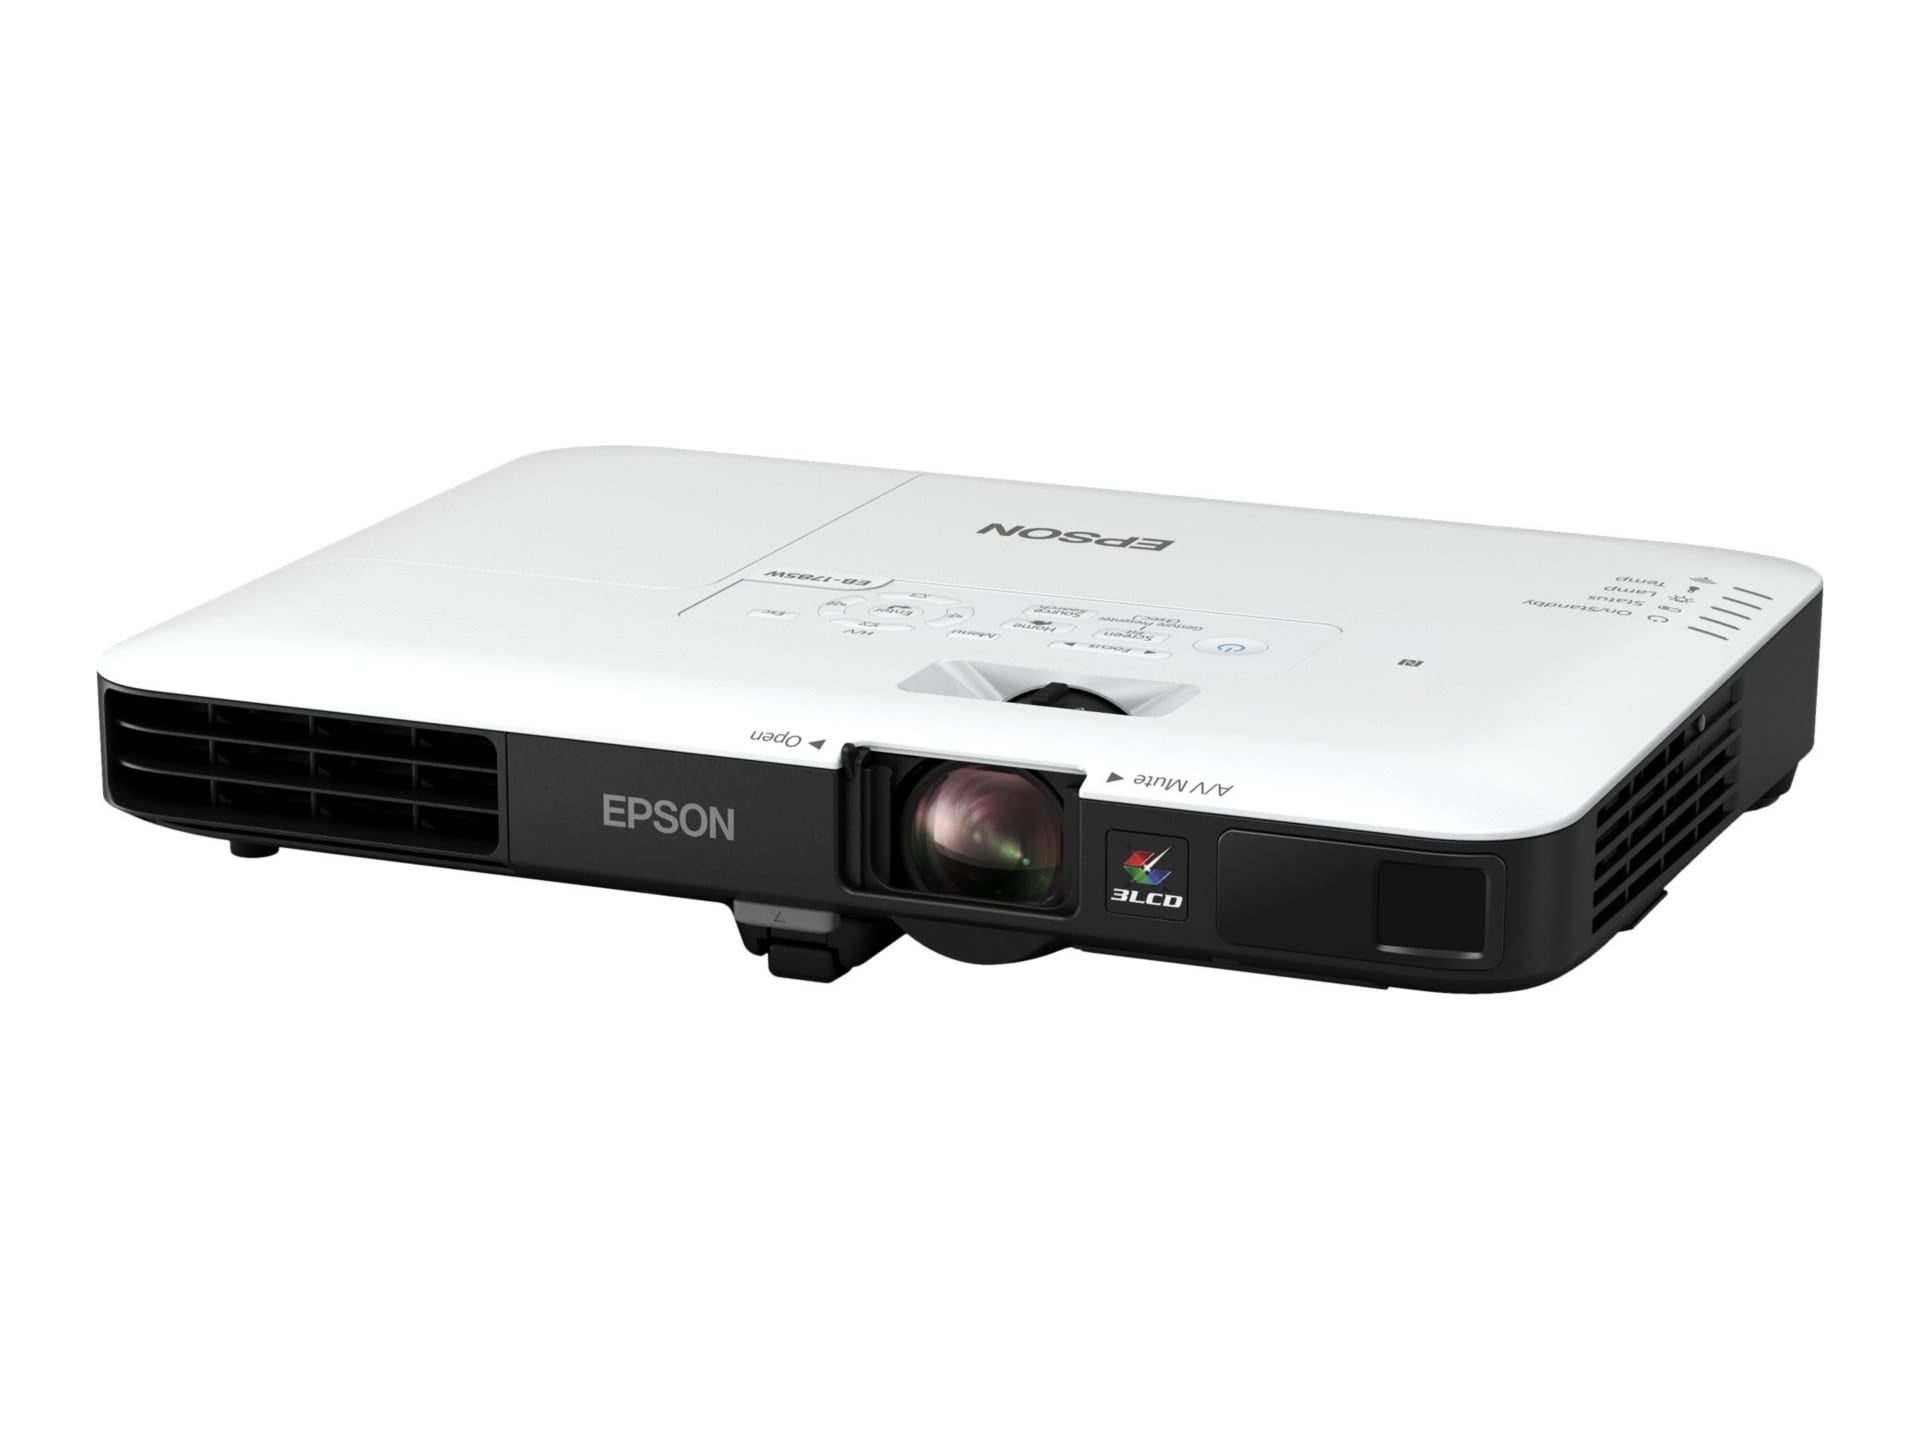 Epson Powerlite 1780w 3lcd Projector Portable Wi Fi V11h7950 Projectors Cdw Com